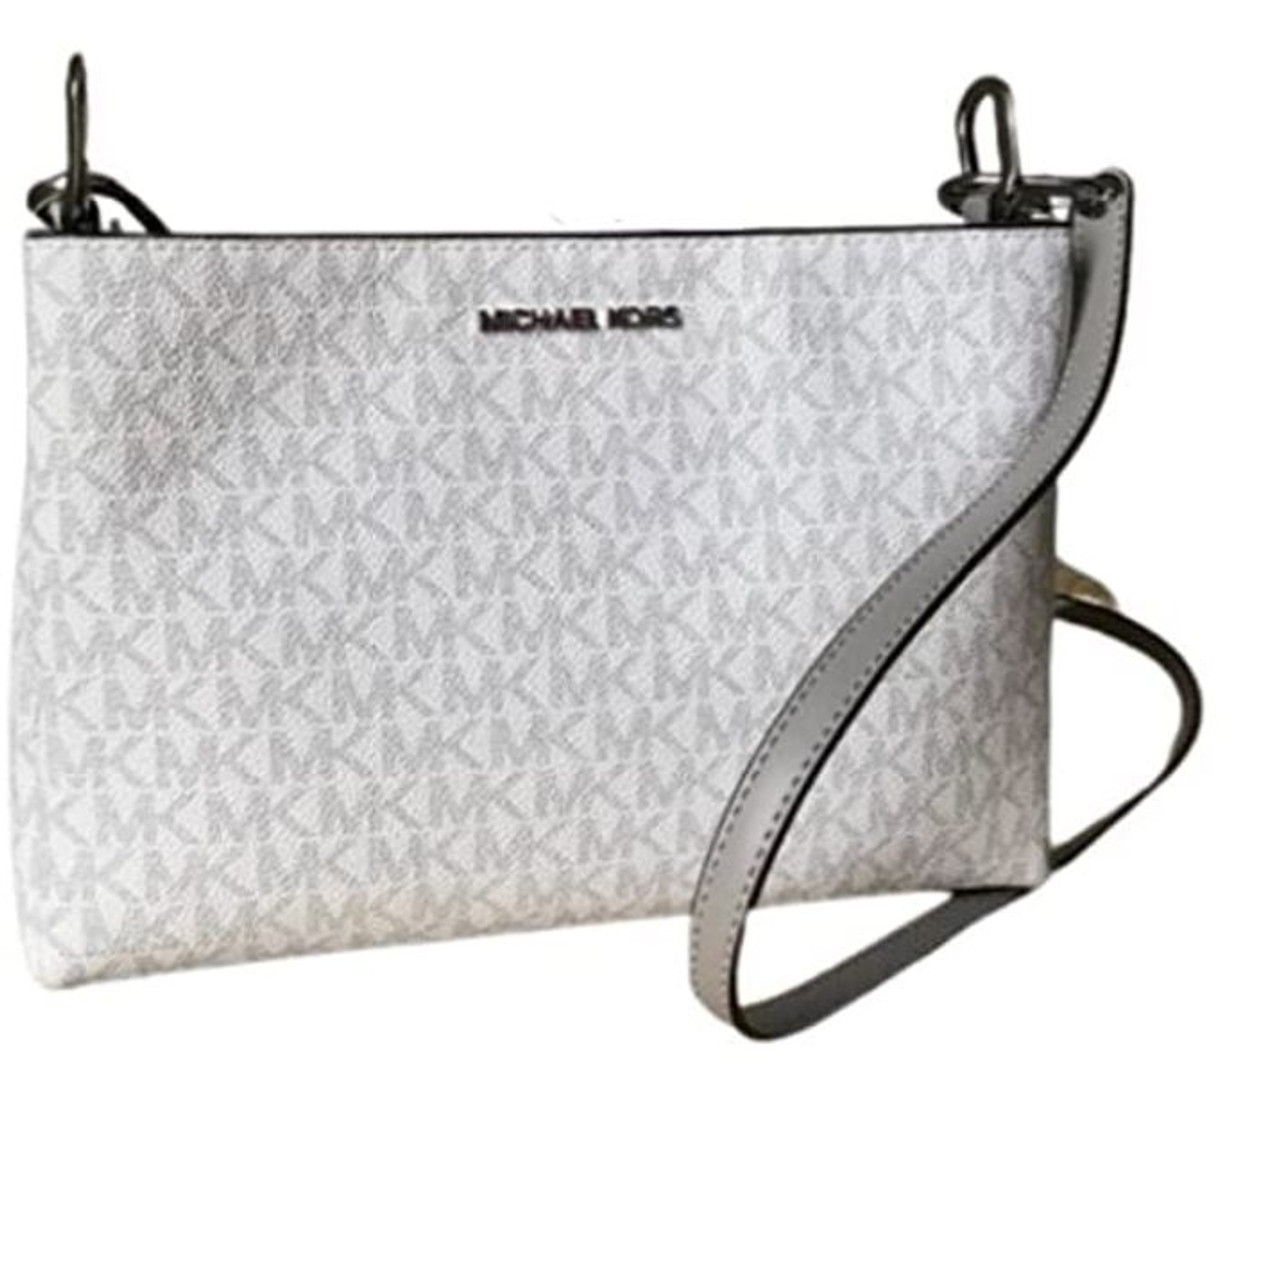 Michael Kors Trisha Leather Medium Triple Compartment Crossbody Bag